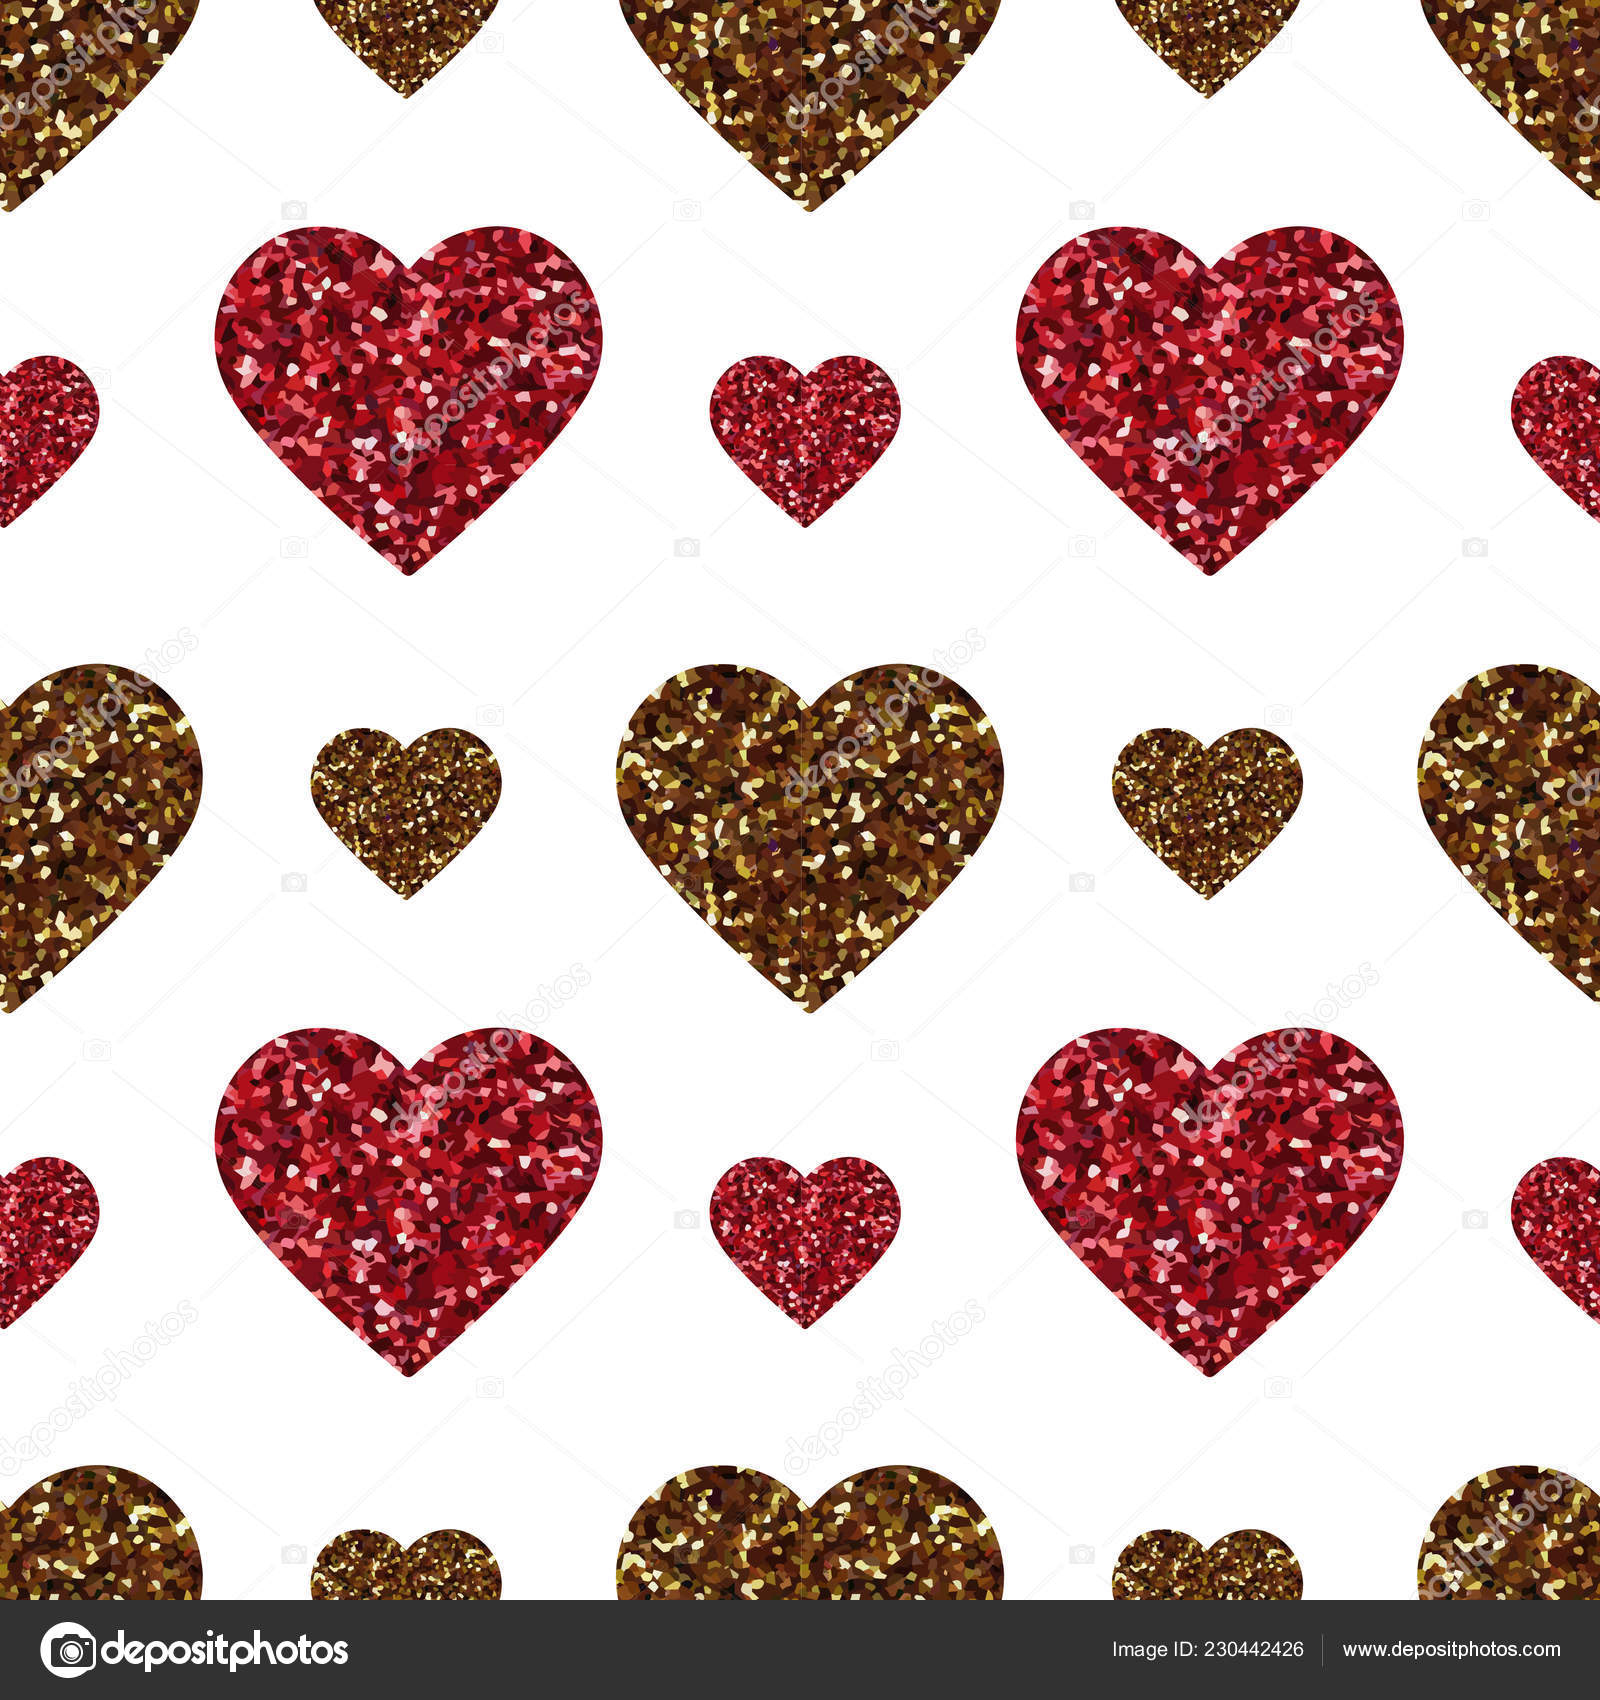 Gold glitter heart seamless pattern. Symbol of love, Valentine day